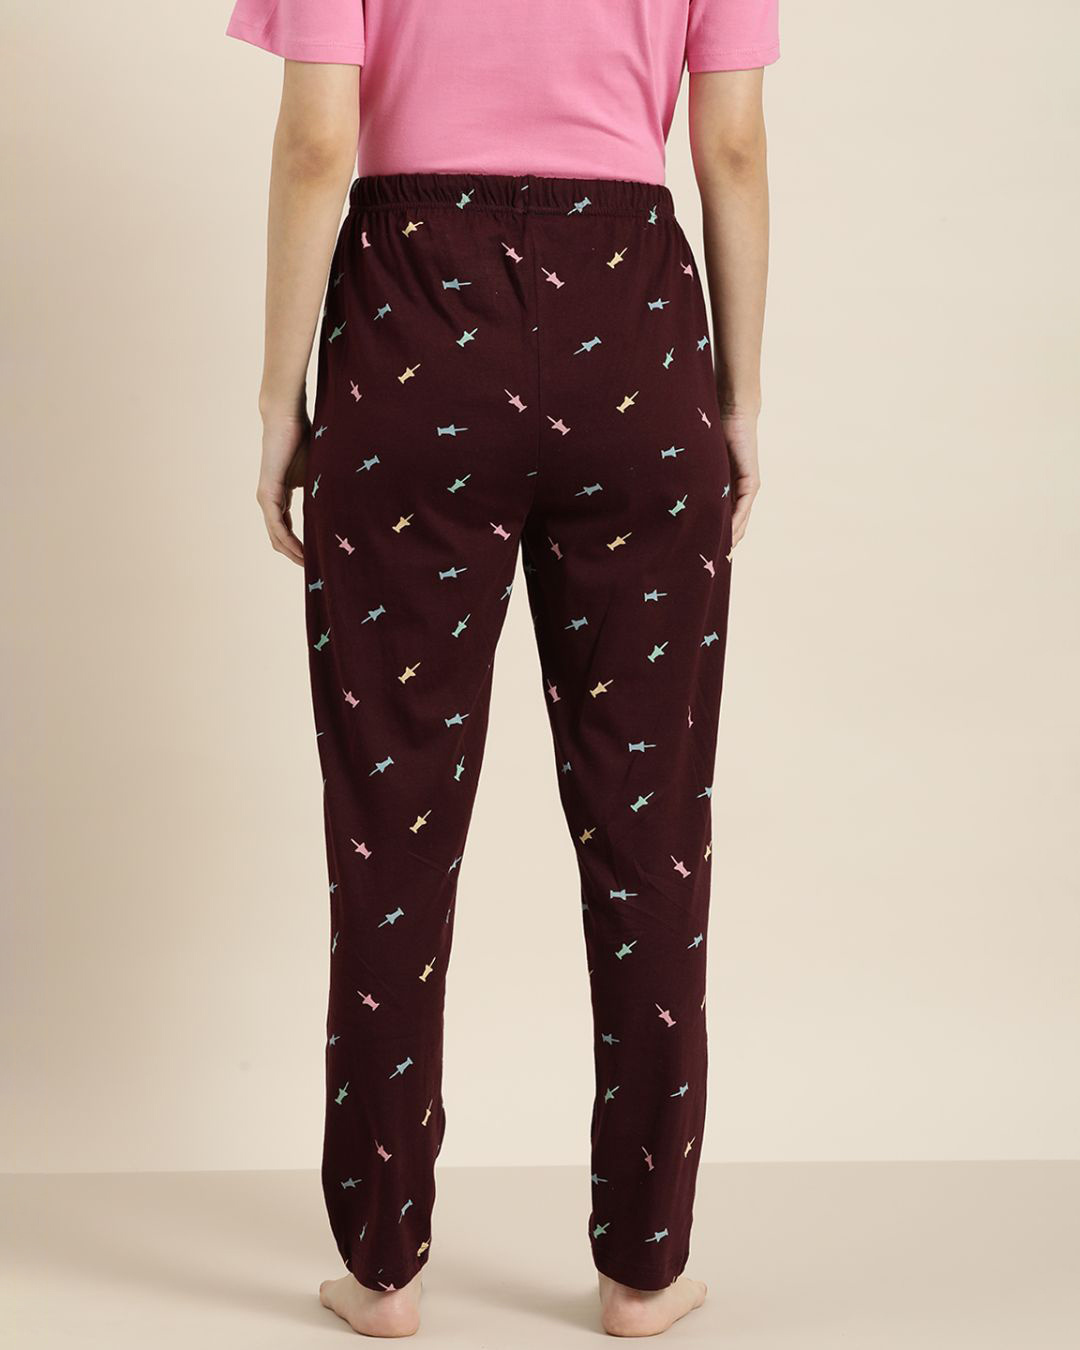 Shop Maroon Graphic Pyjamas5-Back